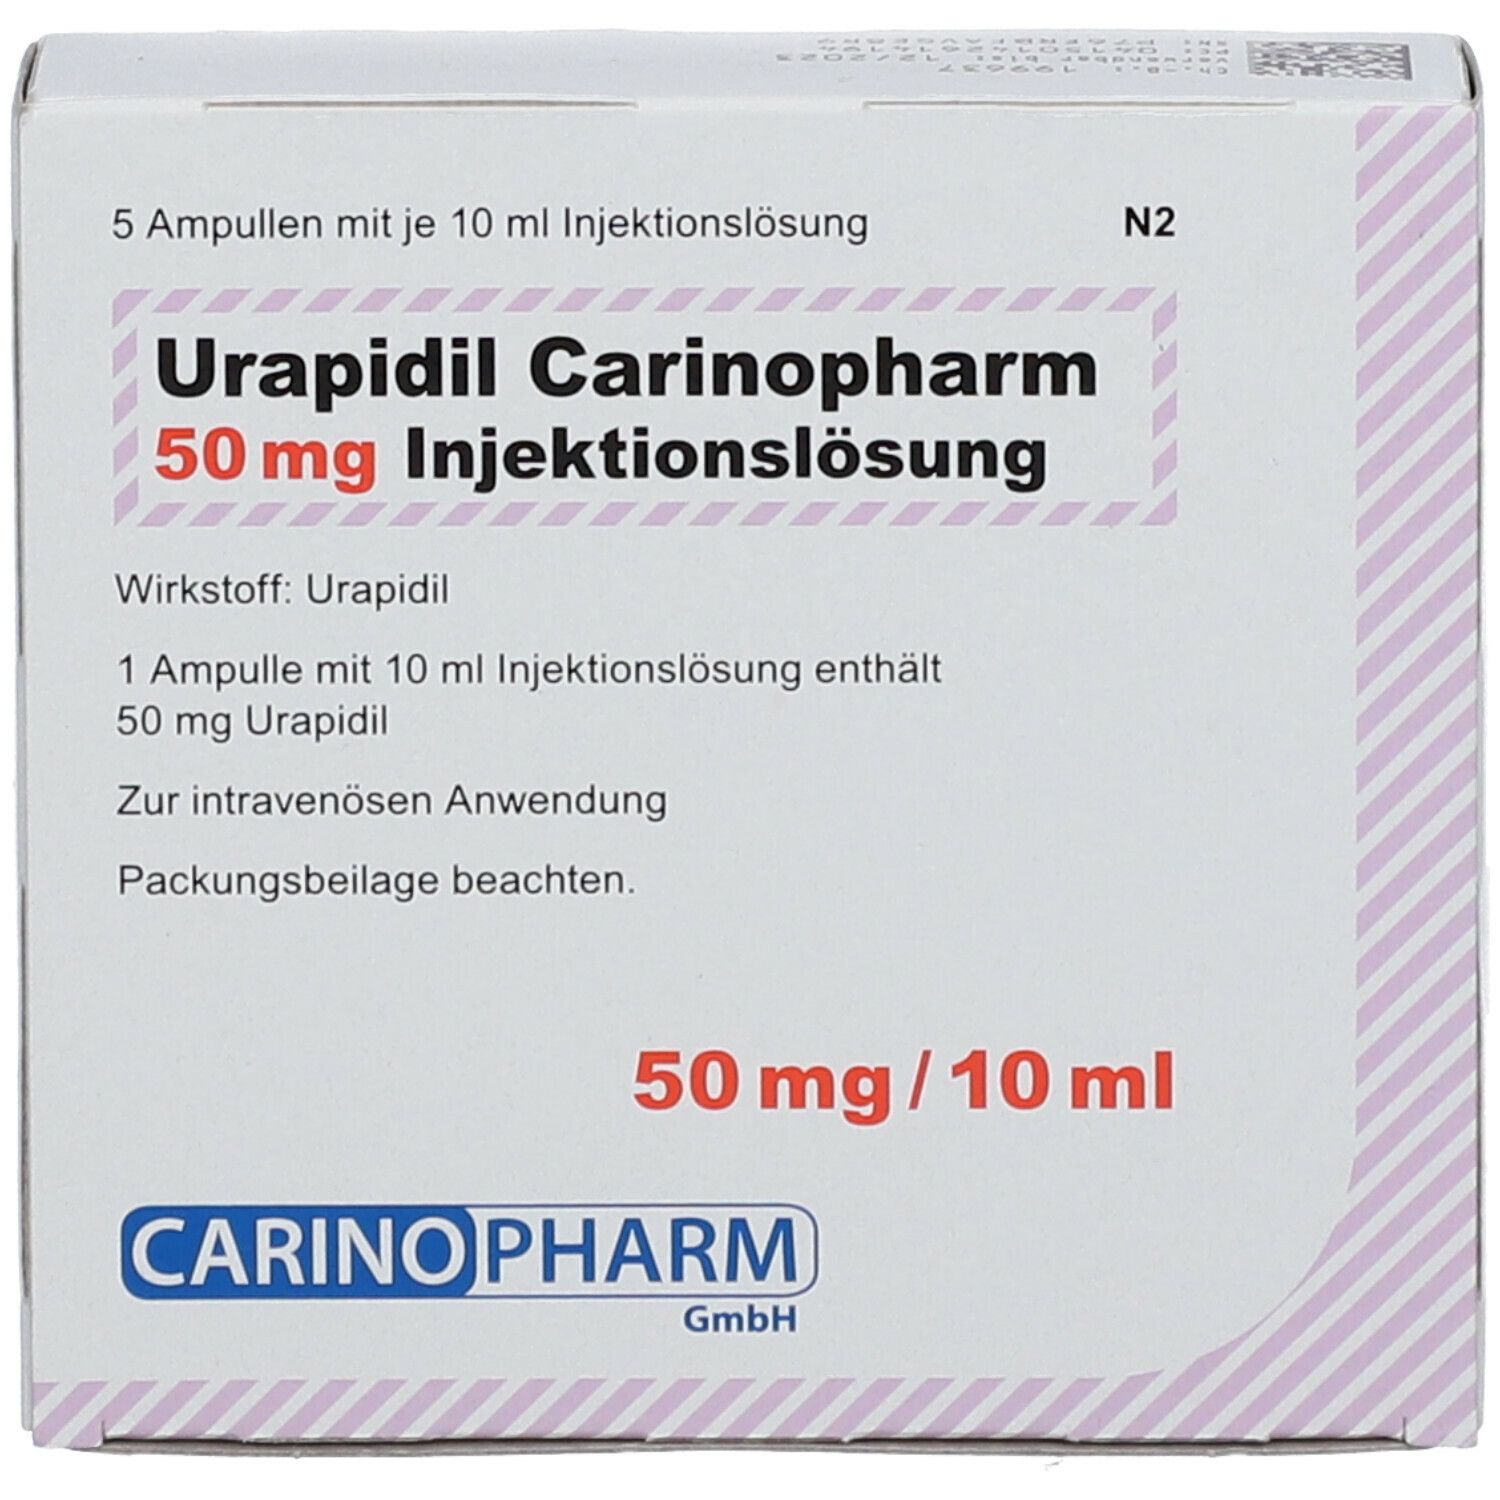 Urapidil Carinopharm 50 mg